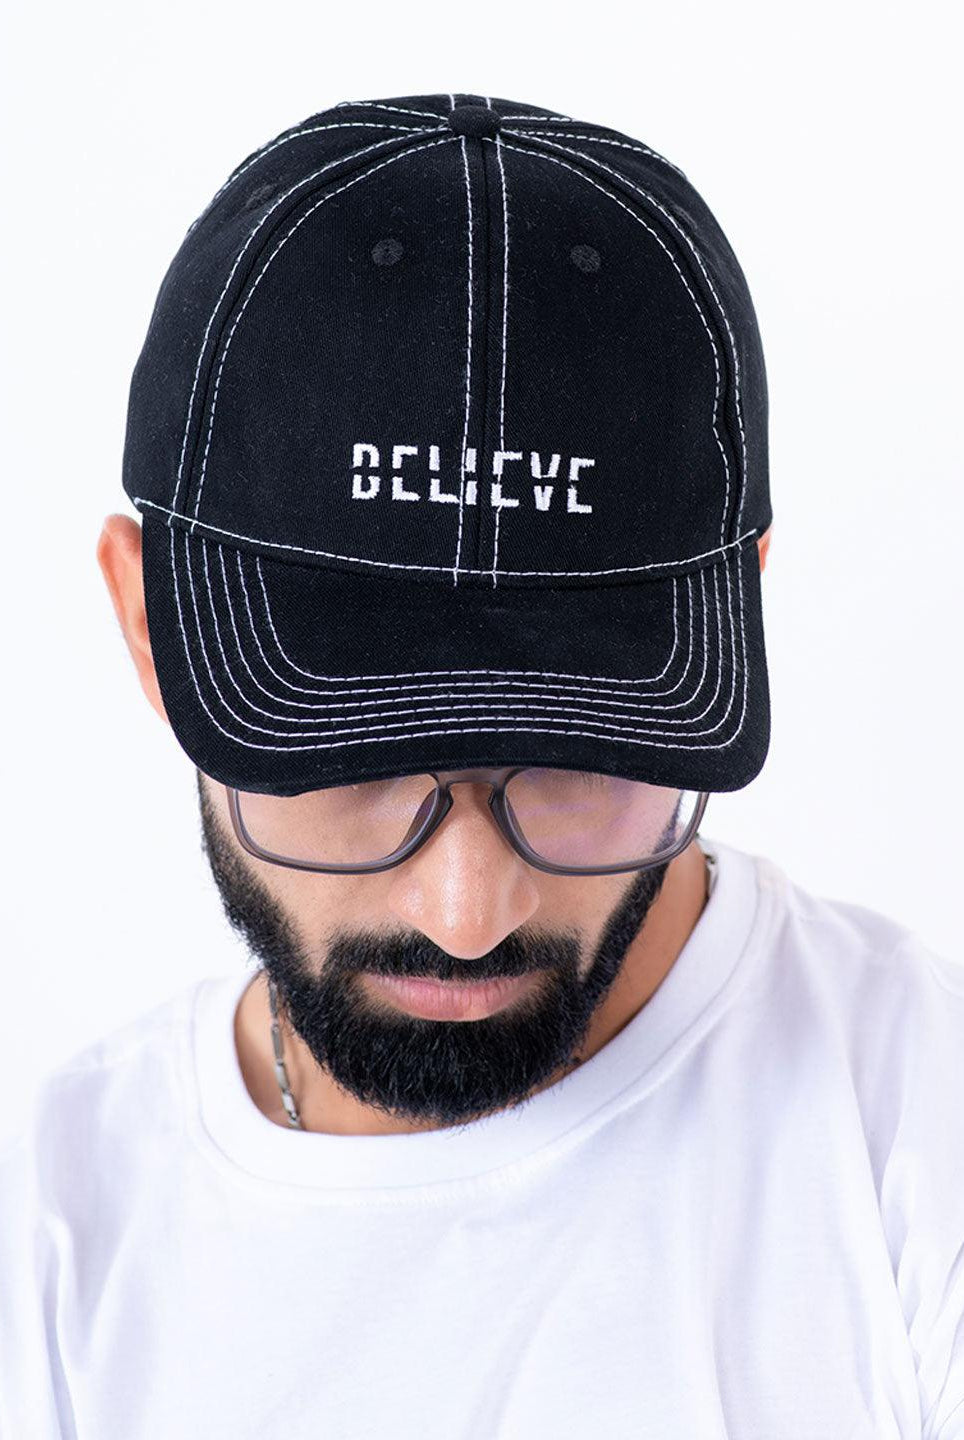 Believe Embroidered Black Free Size Unisex Baseball Caps - Tistabene